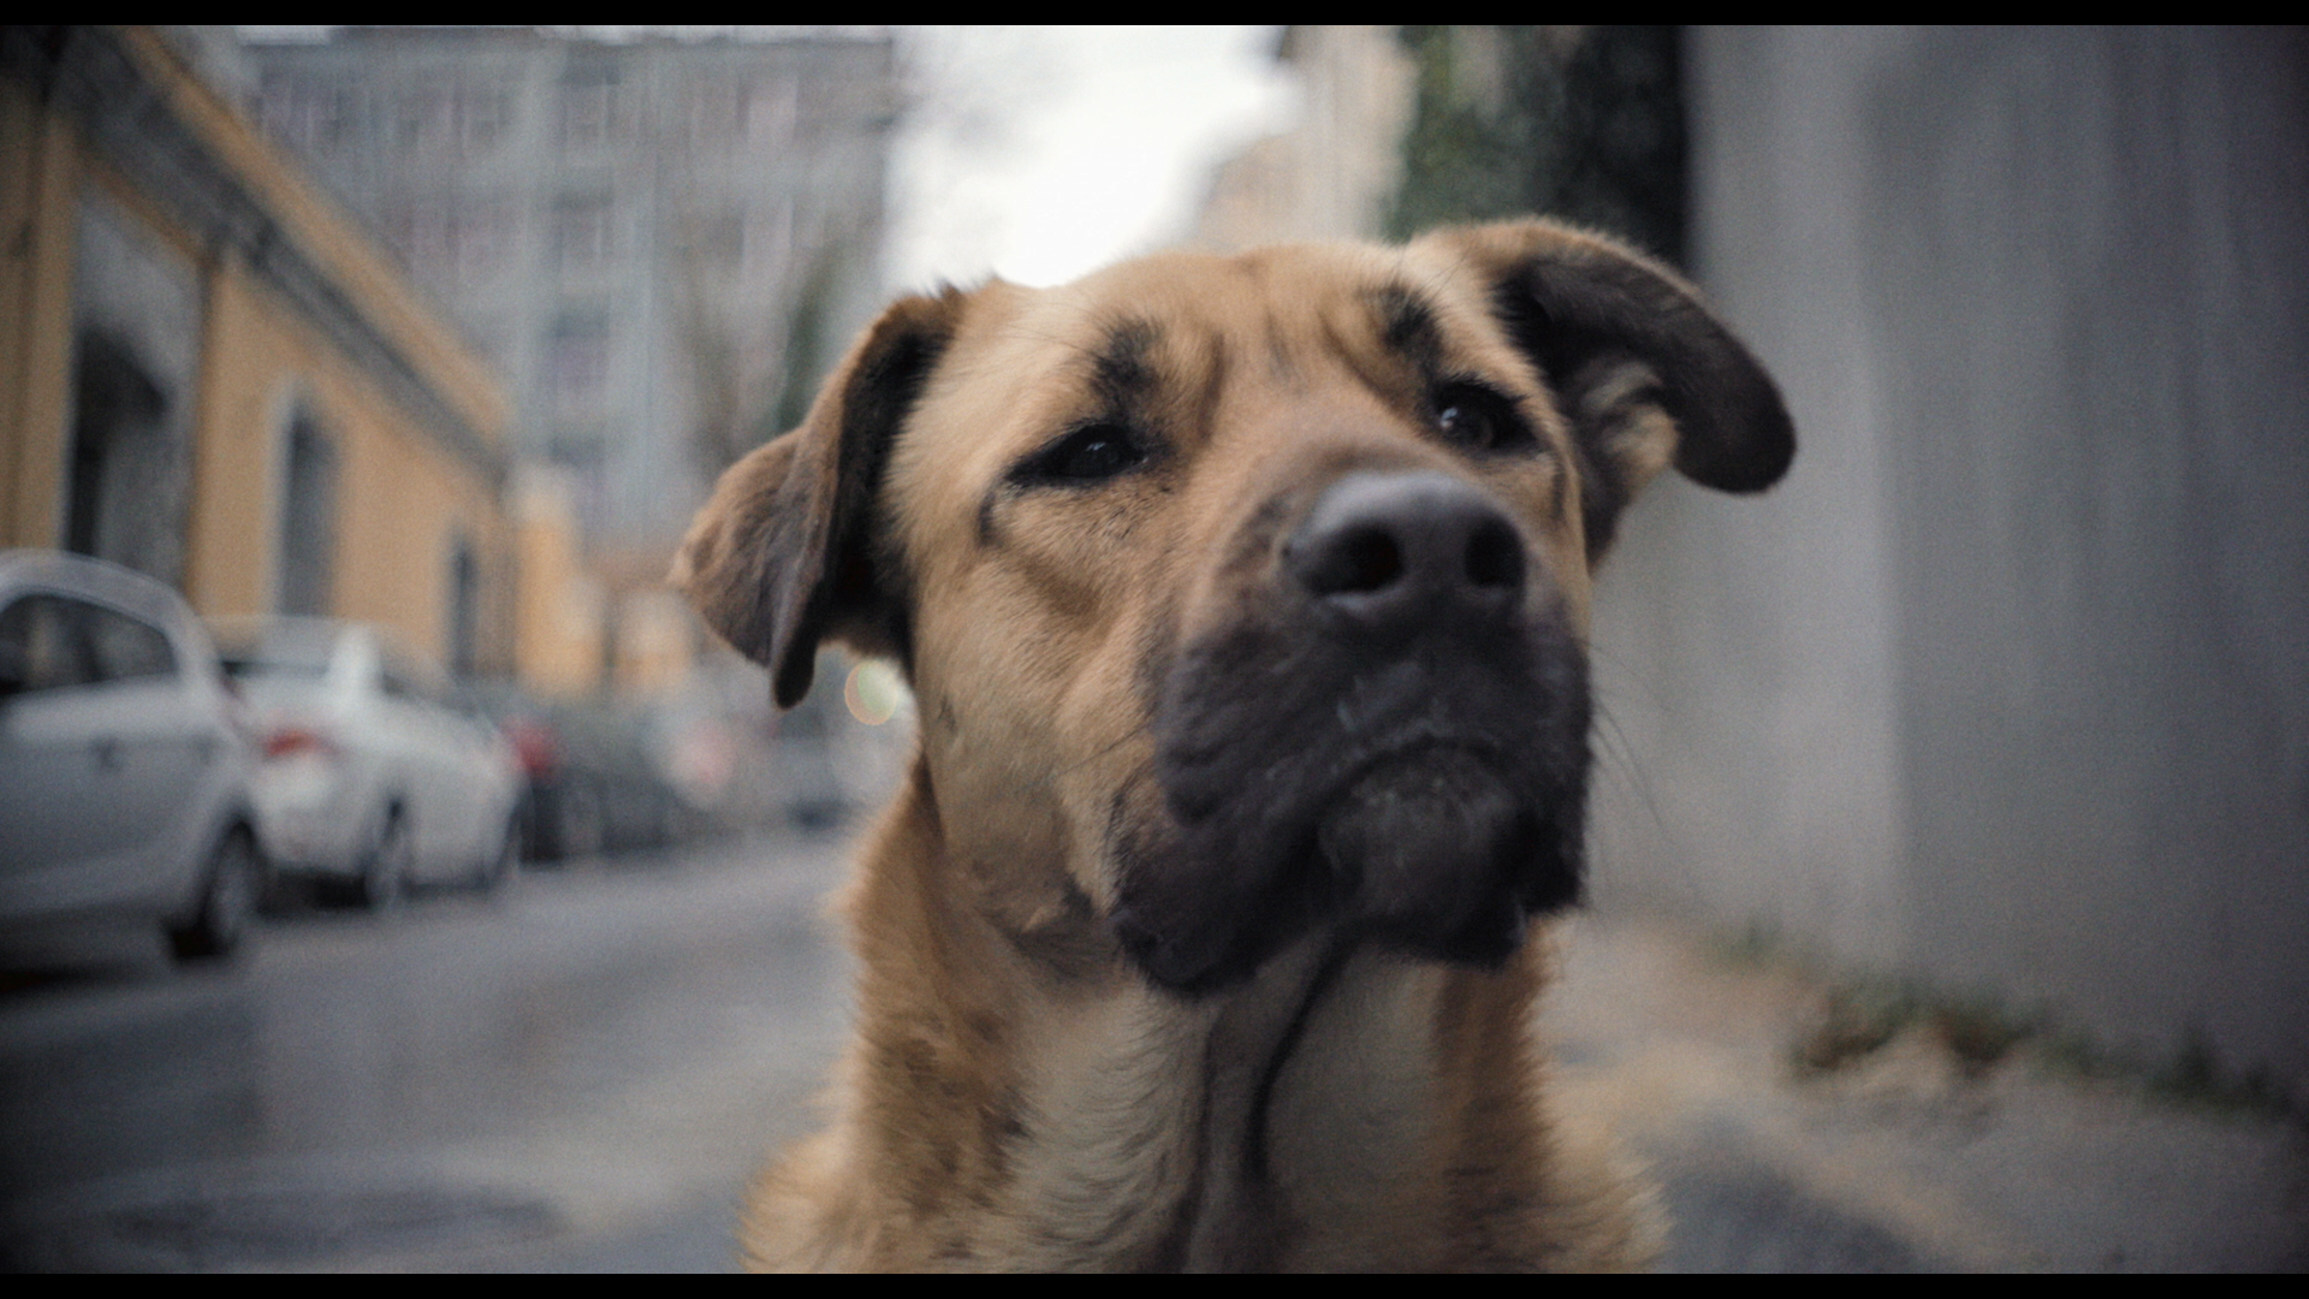 Screenshot from the documentary “Stray,” by filmmaker Elizabeth Lo, telling the story of Istanbul’s street dogs.&#xA;&#xA;[FEATURES]&#xA;&#xA;CREDIT: Stray